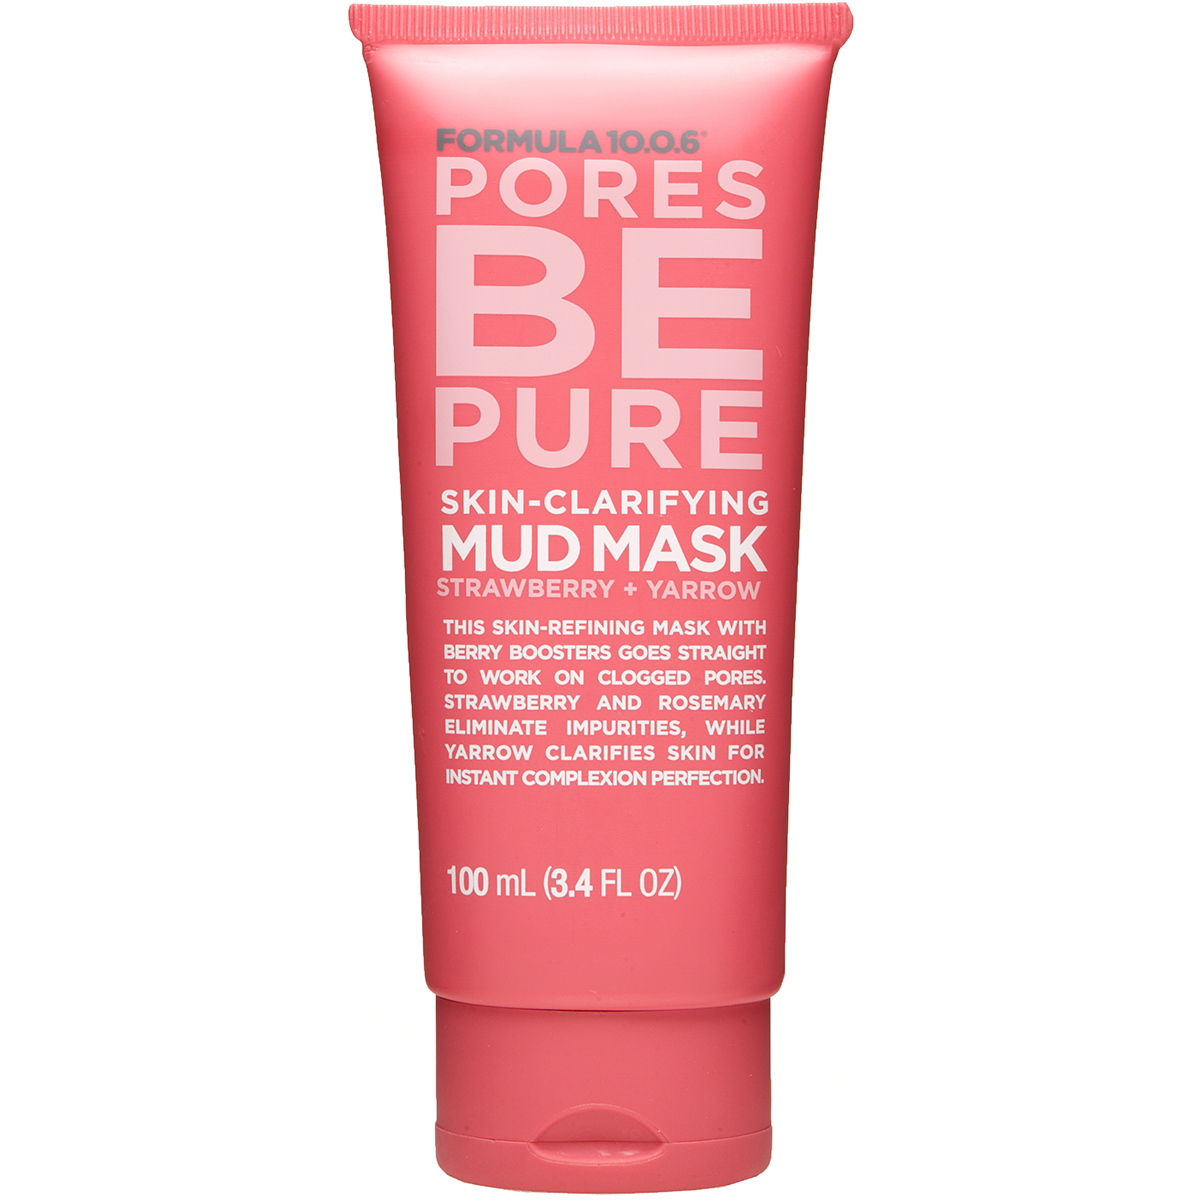 Bilde av Formula 10.0.6 Pores Be Pure Skin-clarifying Mud Mask, 100 Ml Formula 10.0.6 Ansiktsmaske